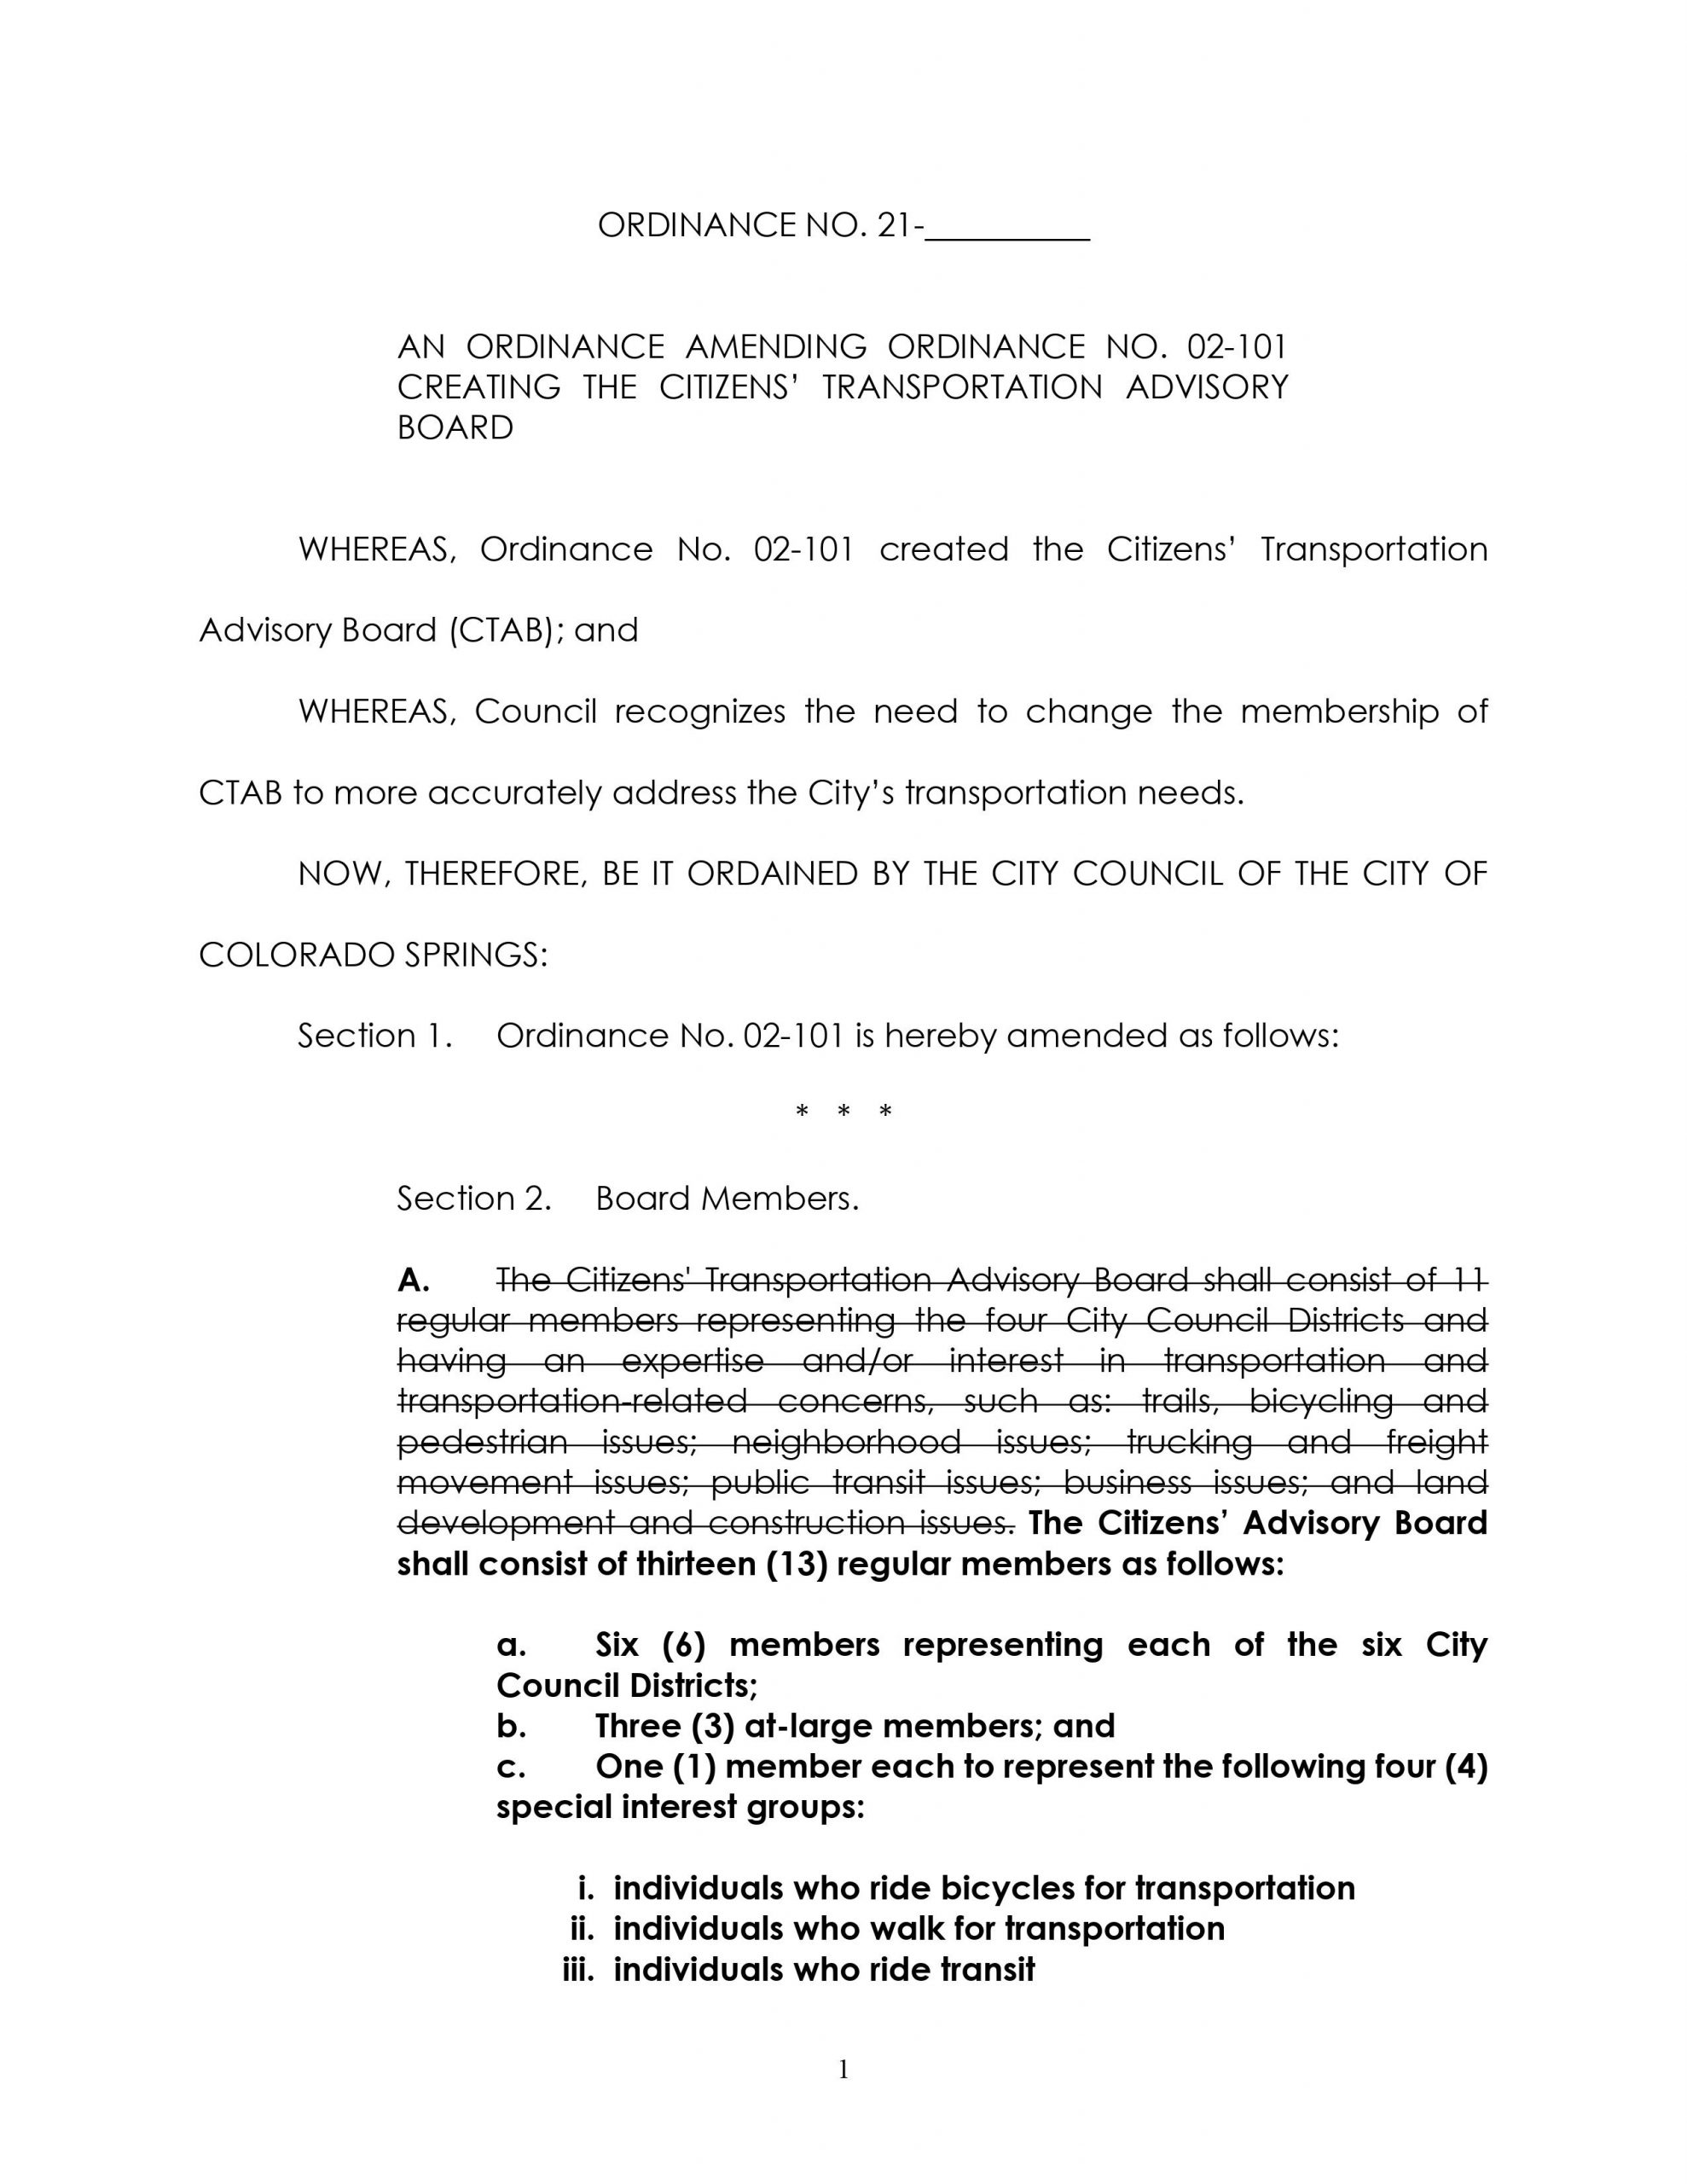 CTAB Ordinance (8-21-21) Page 1